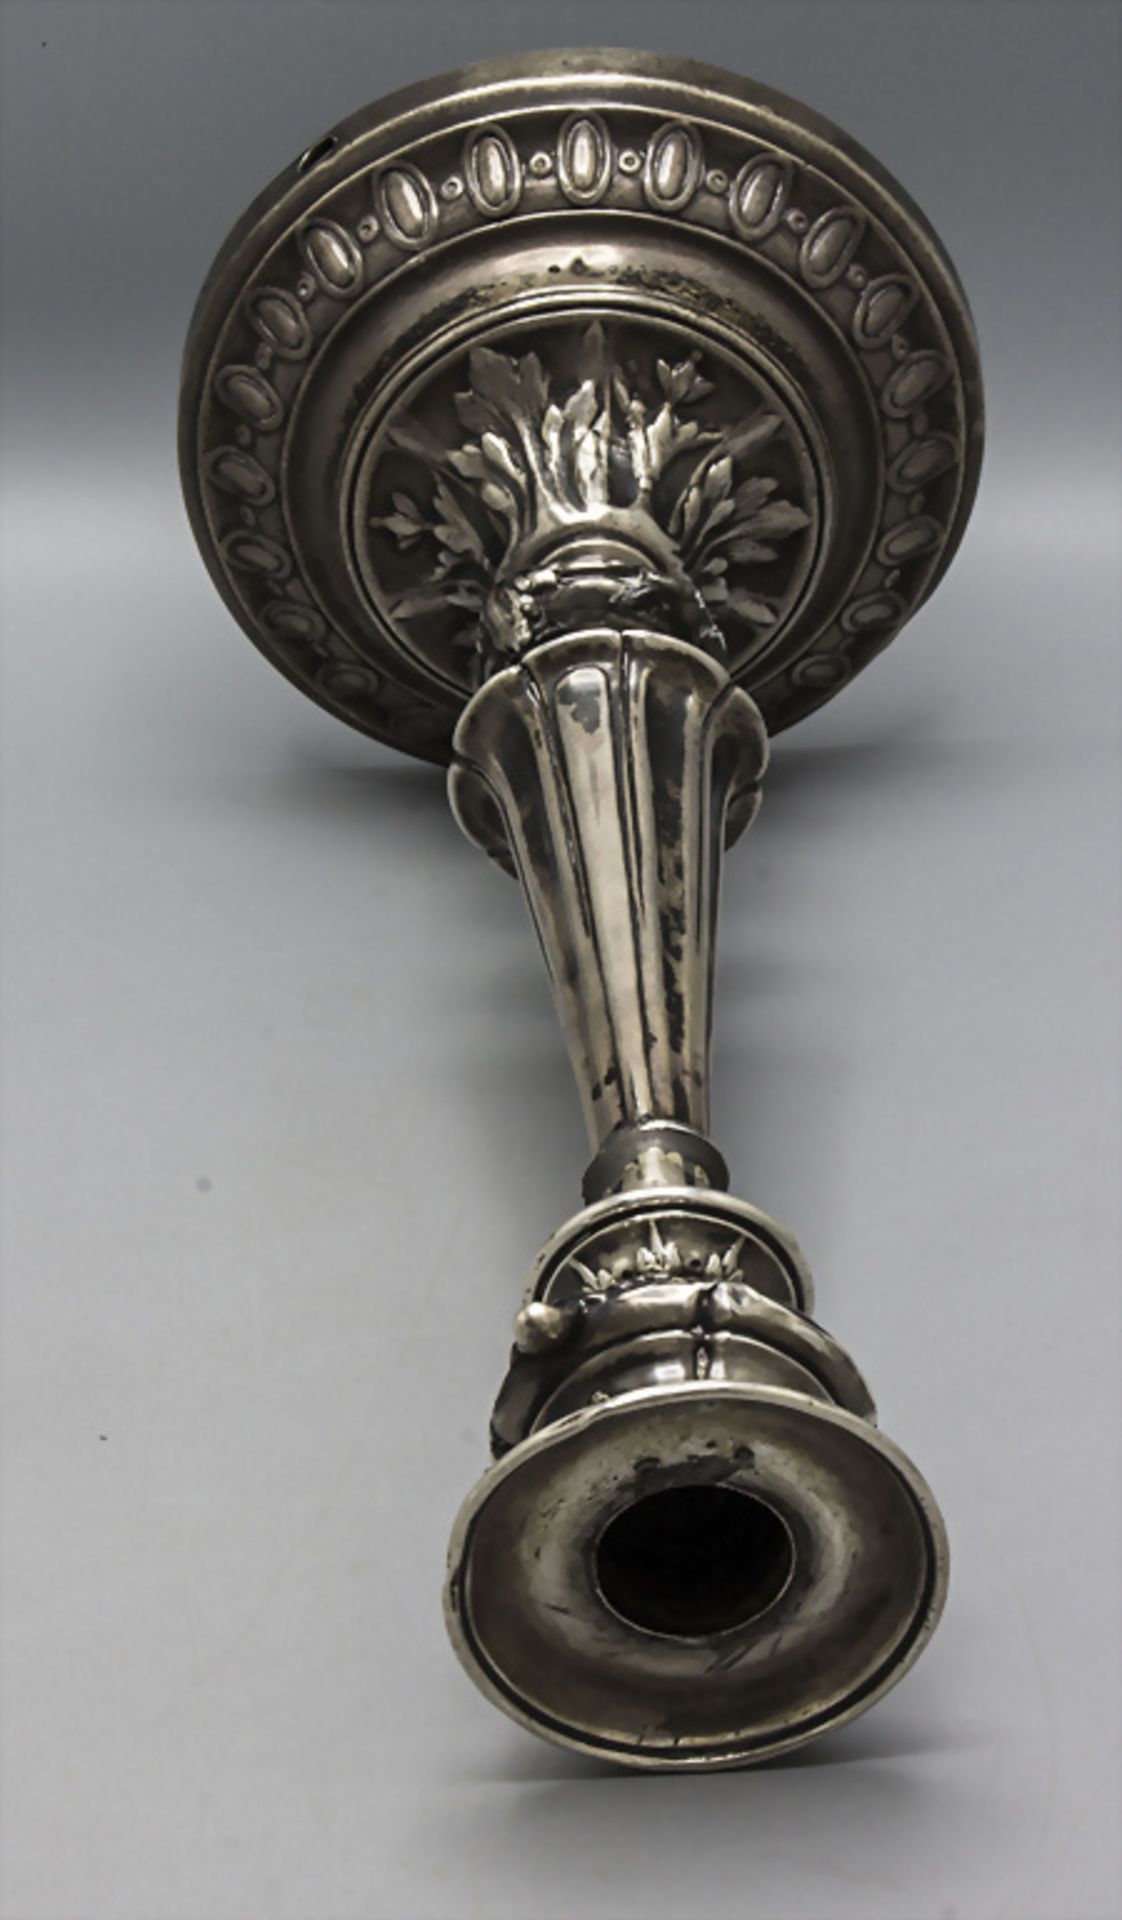 Silber-Leuchter / A silver candlestick, Paris, 19. Jh. - Image 2 of 4